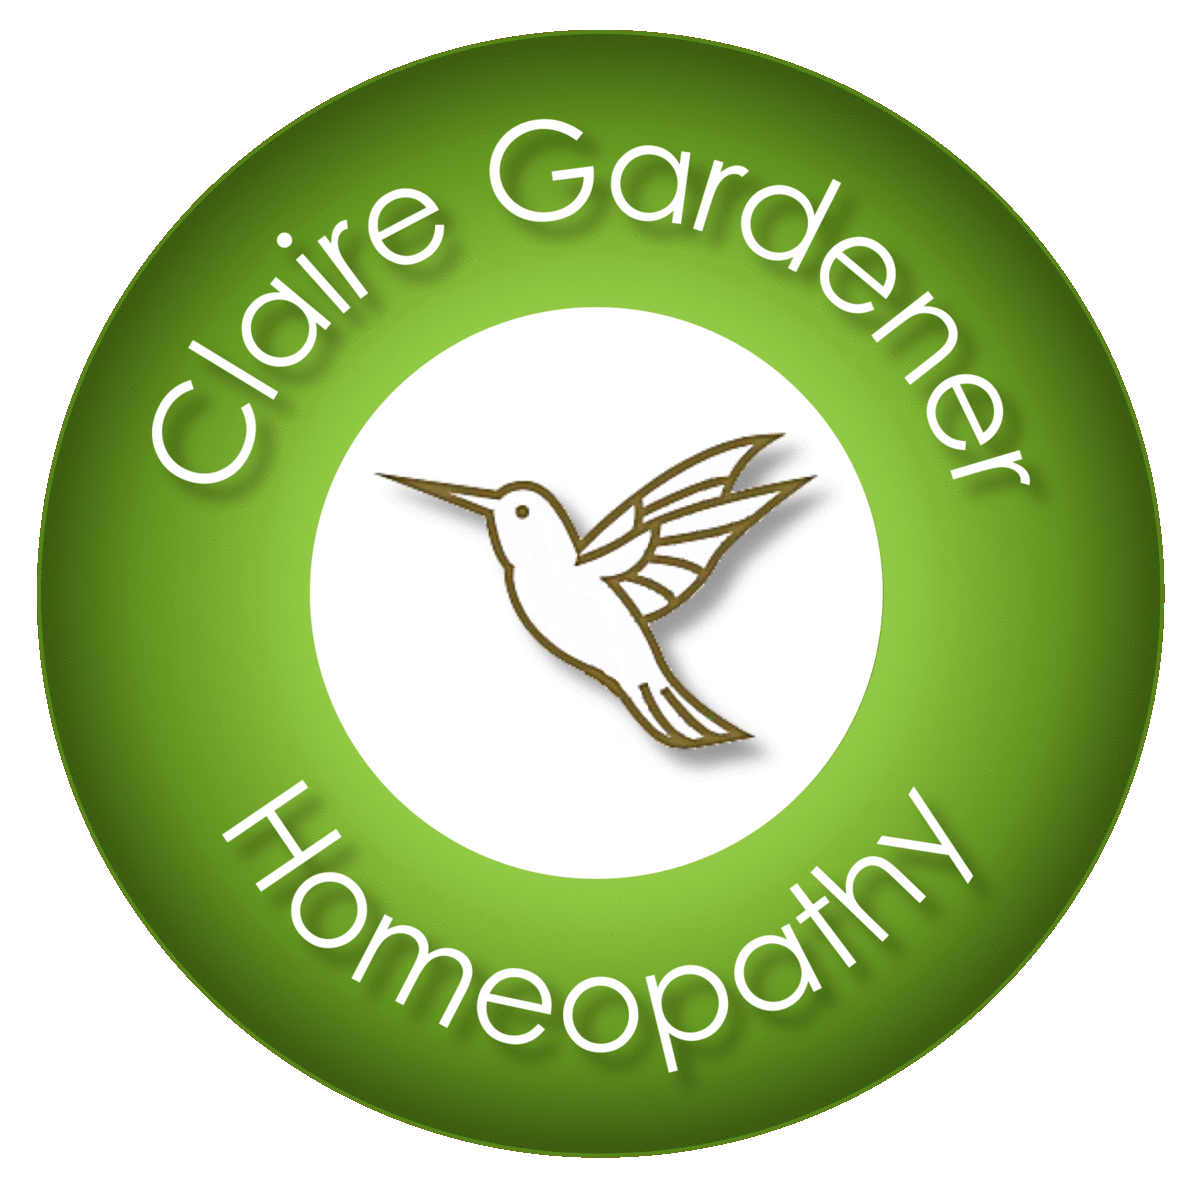 Claire Gardener Homeopathy